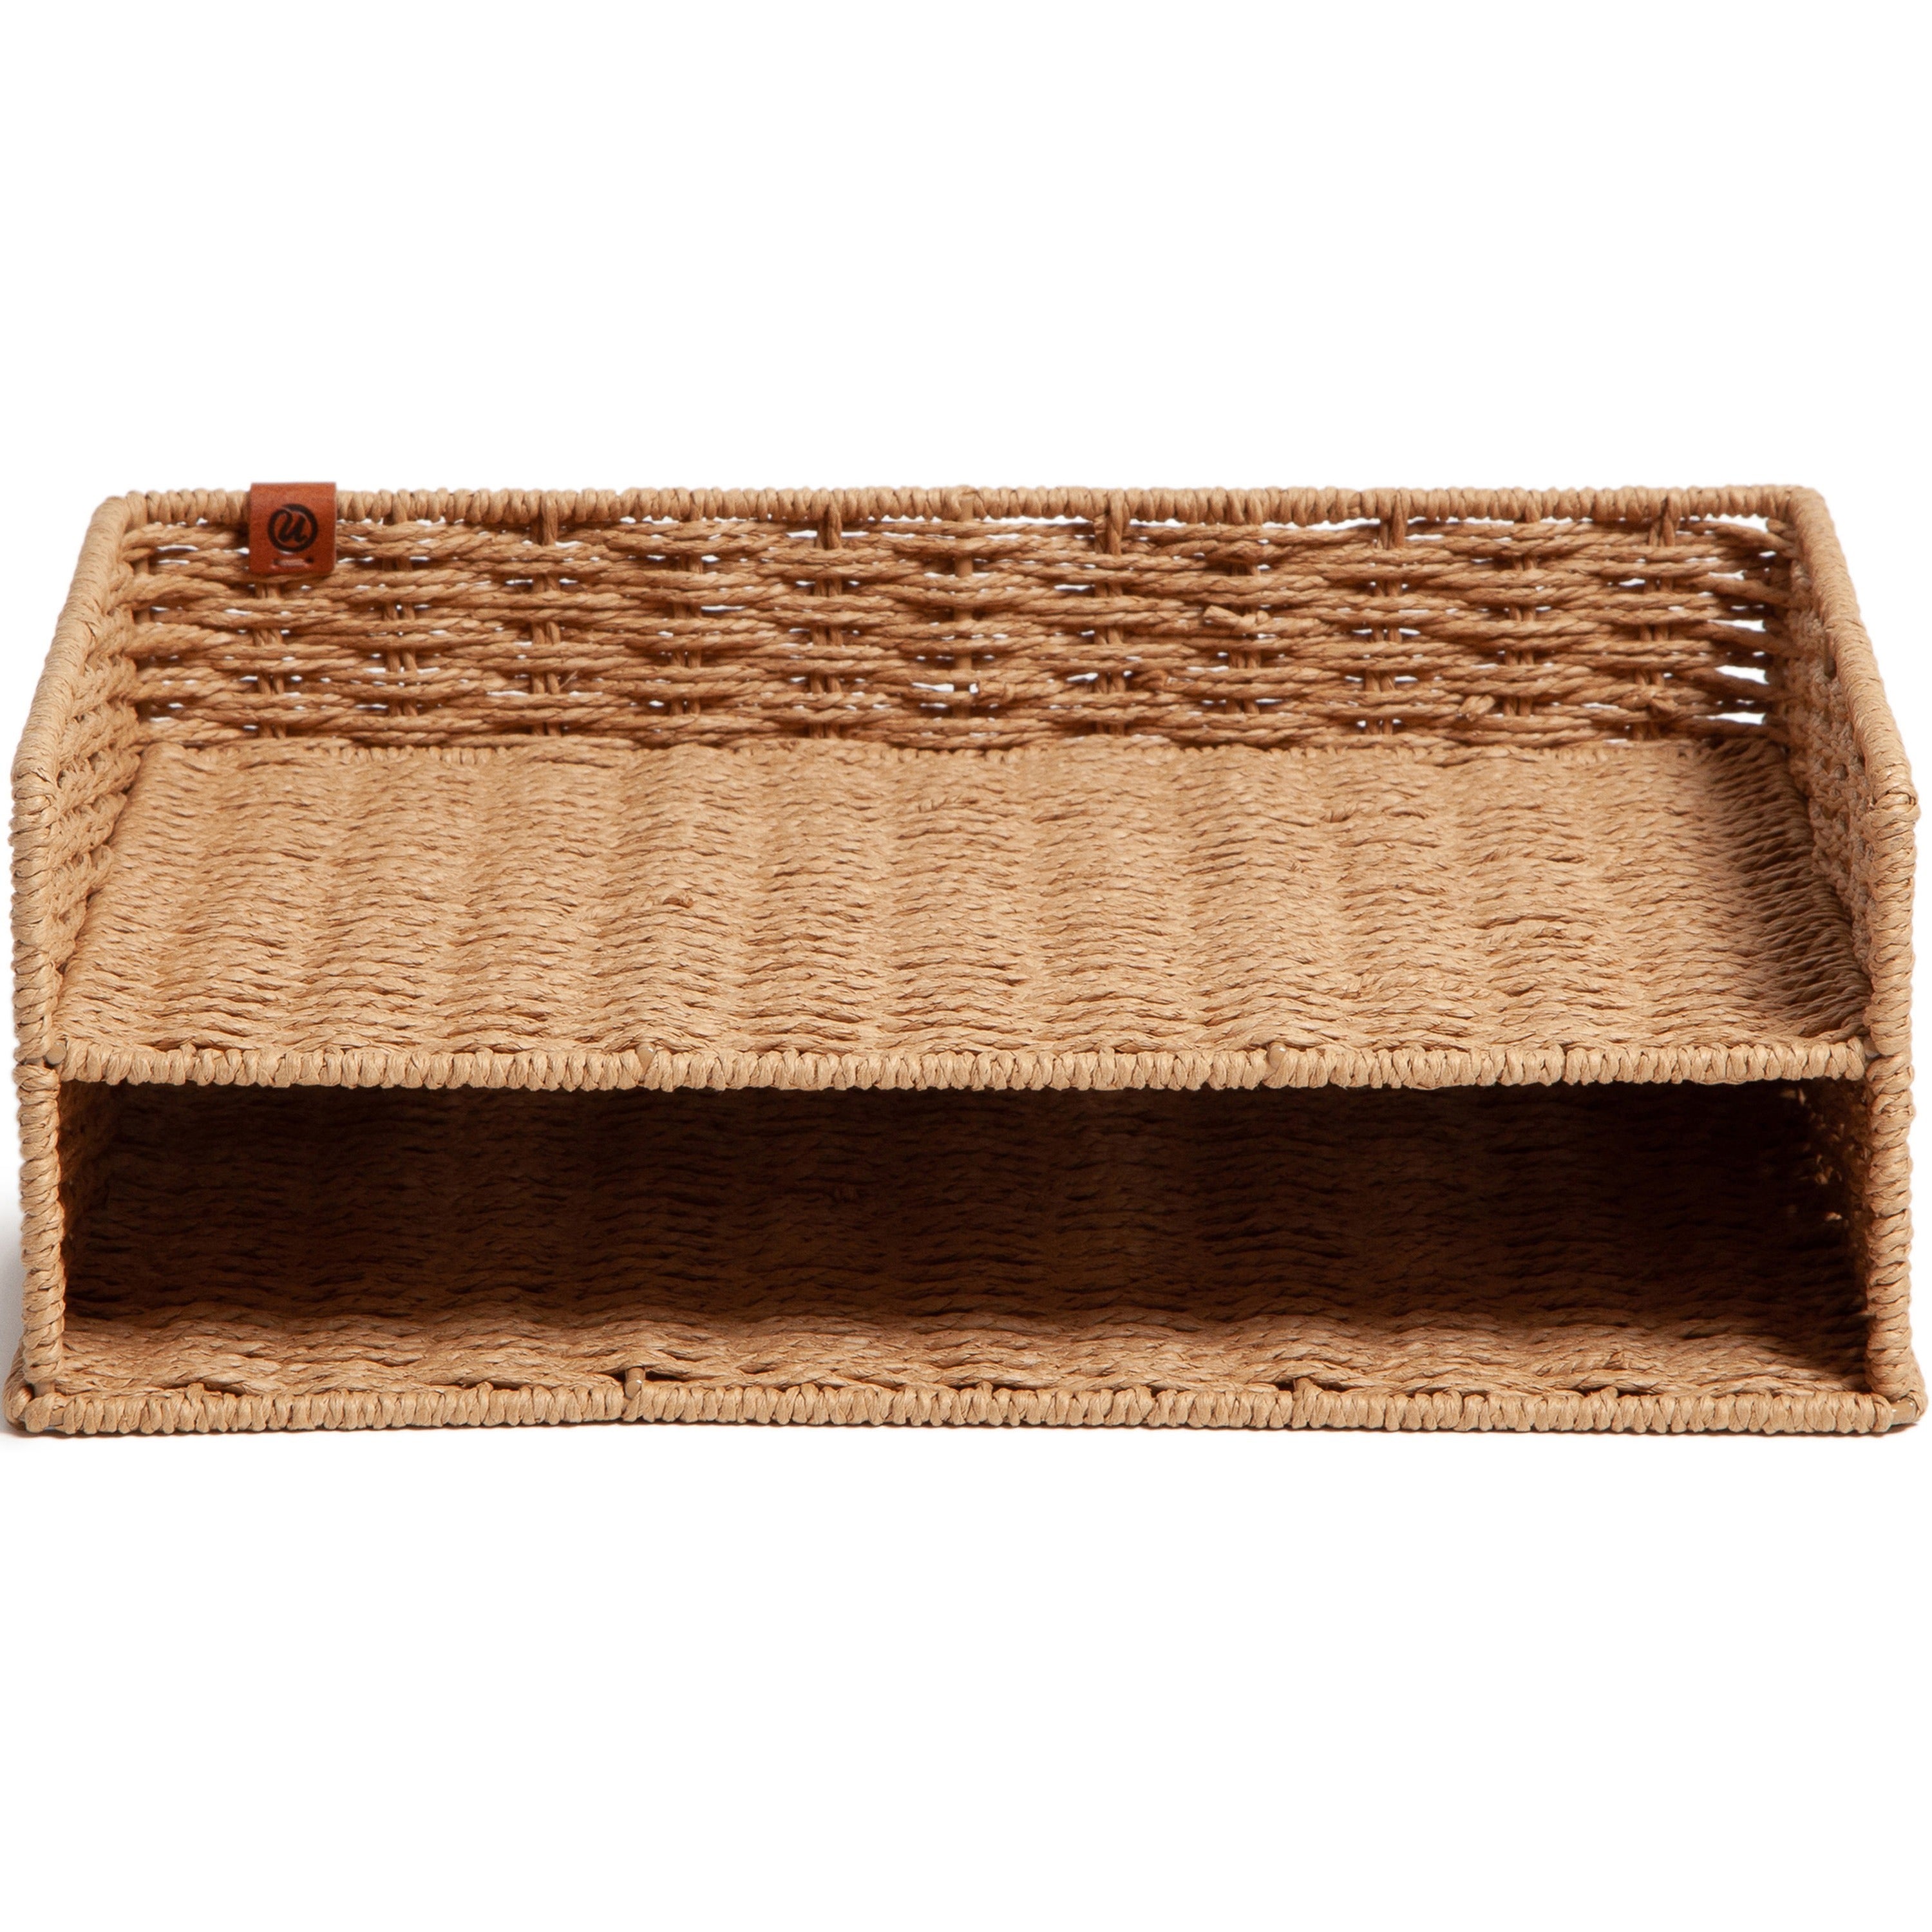 u-brands-woven-paper-tray-sturdy-brown-1-each_ubr6085u0106 - 2